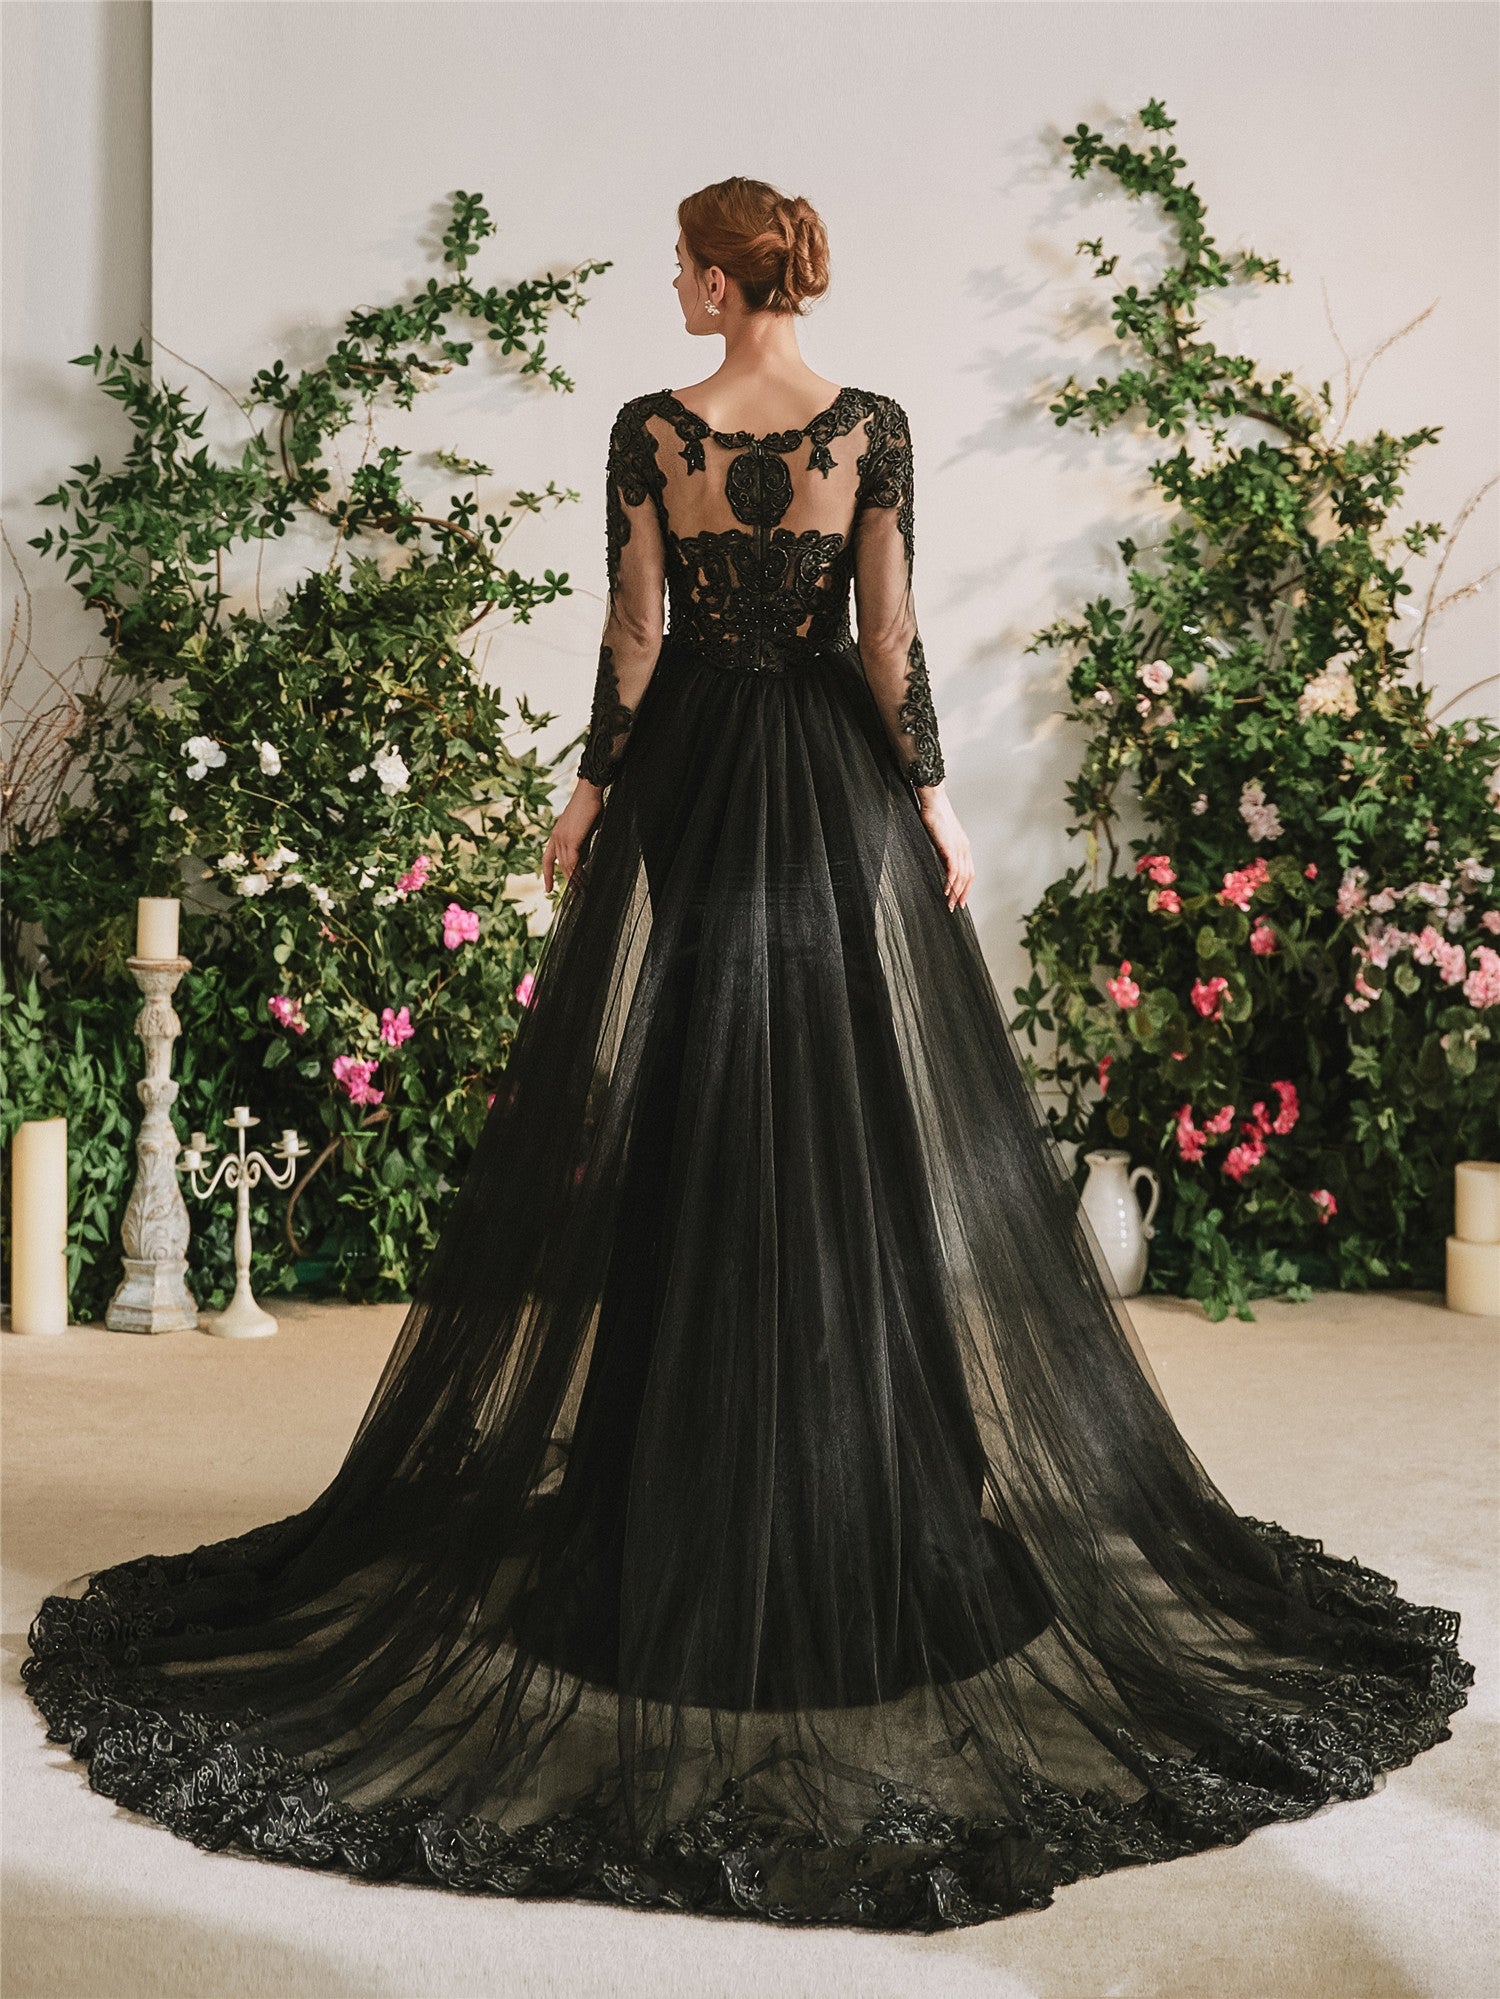 3 in 1 Black Wedding Dress, Black Dress With Cape, Gothic Wedding